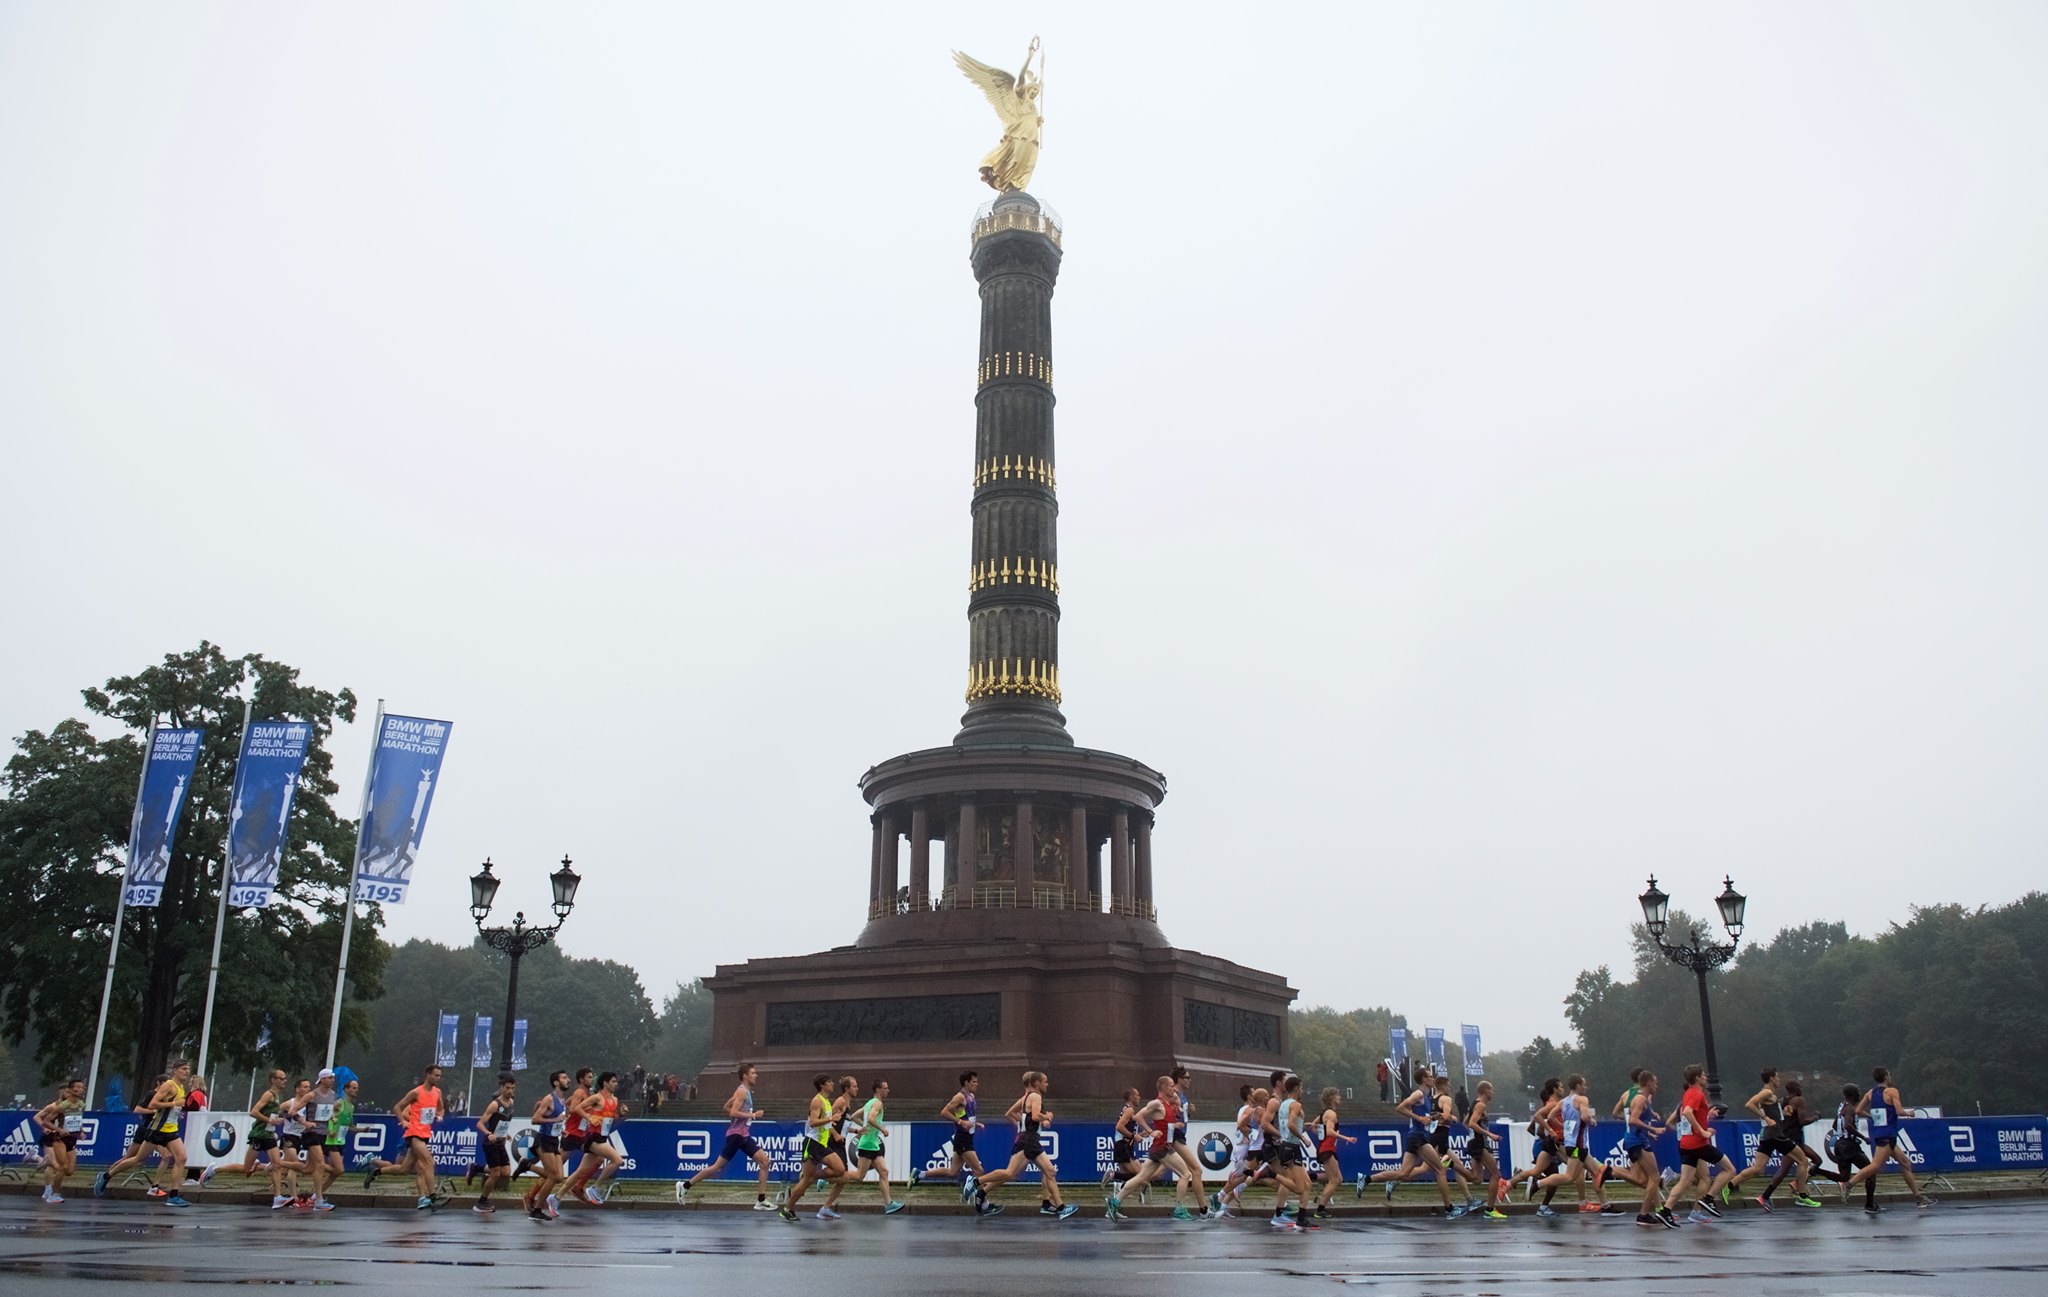 Maratona de Berlim 2019 2